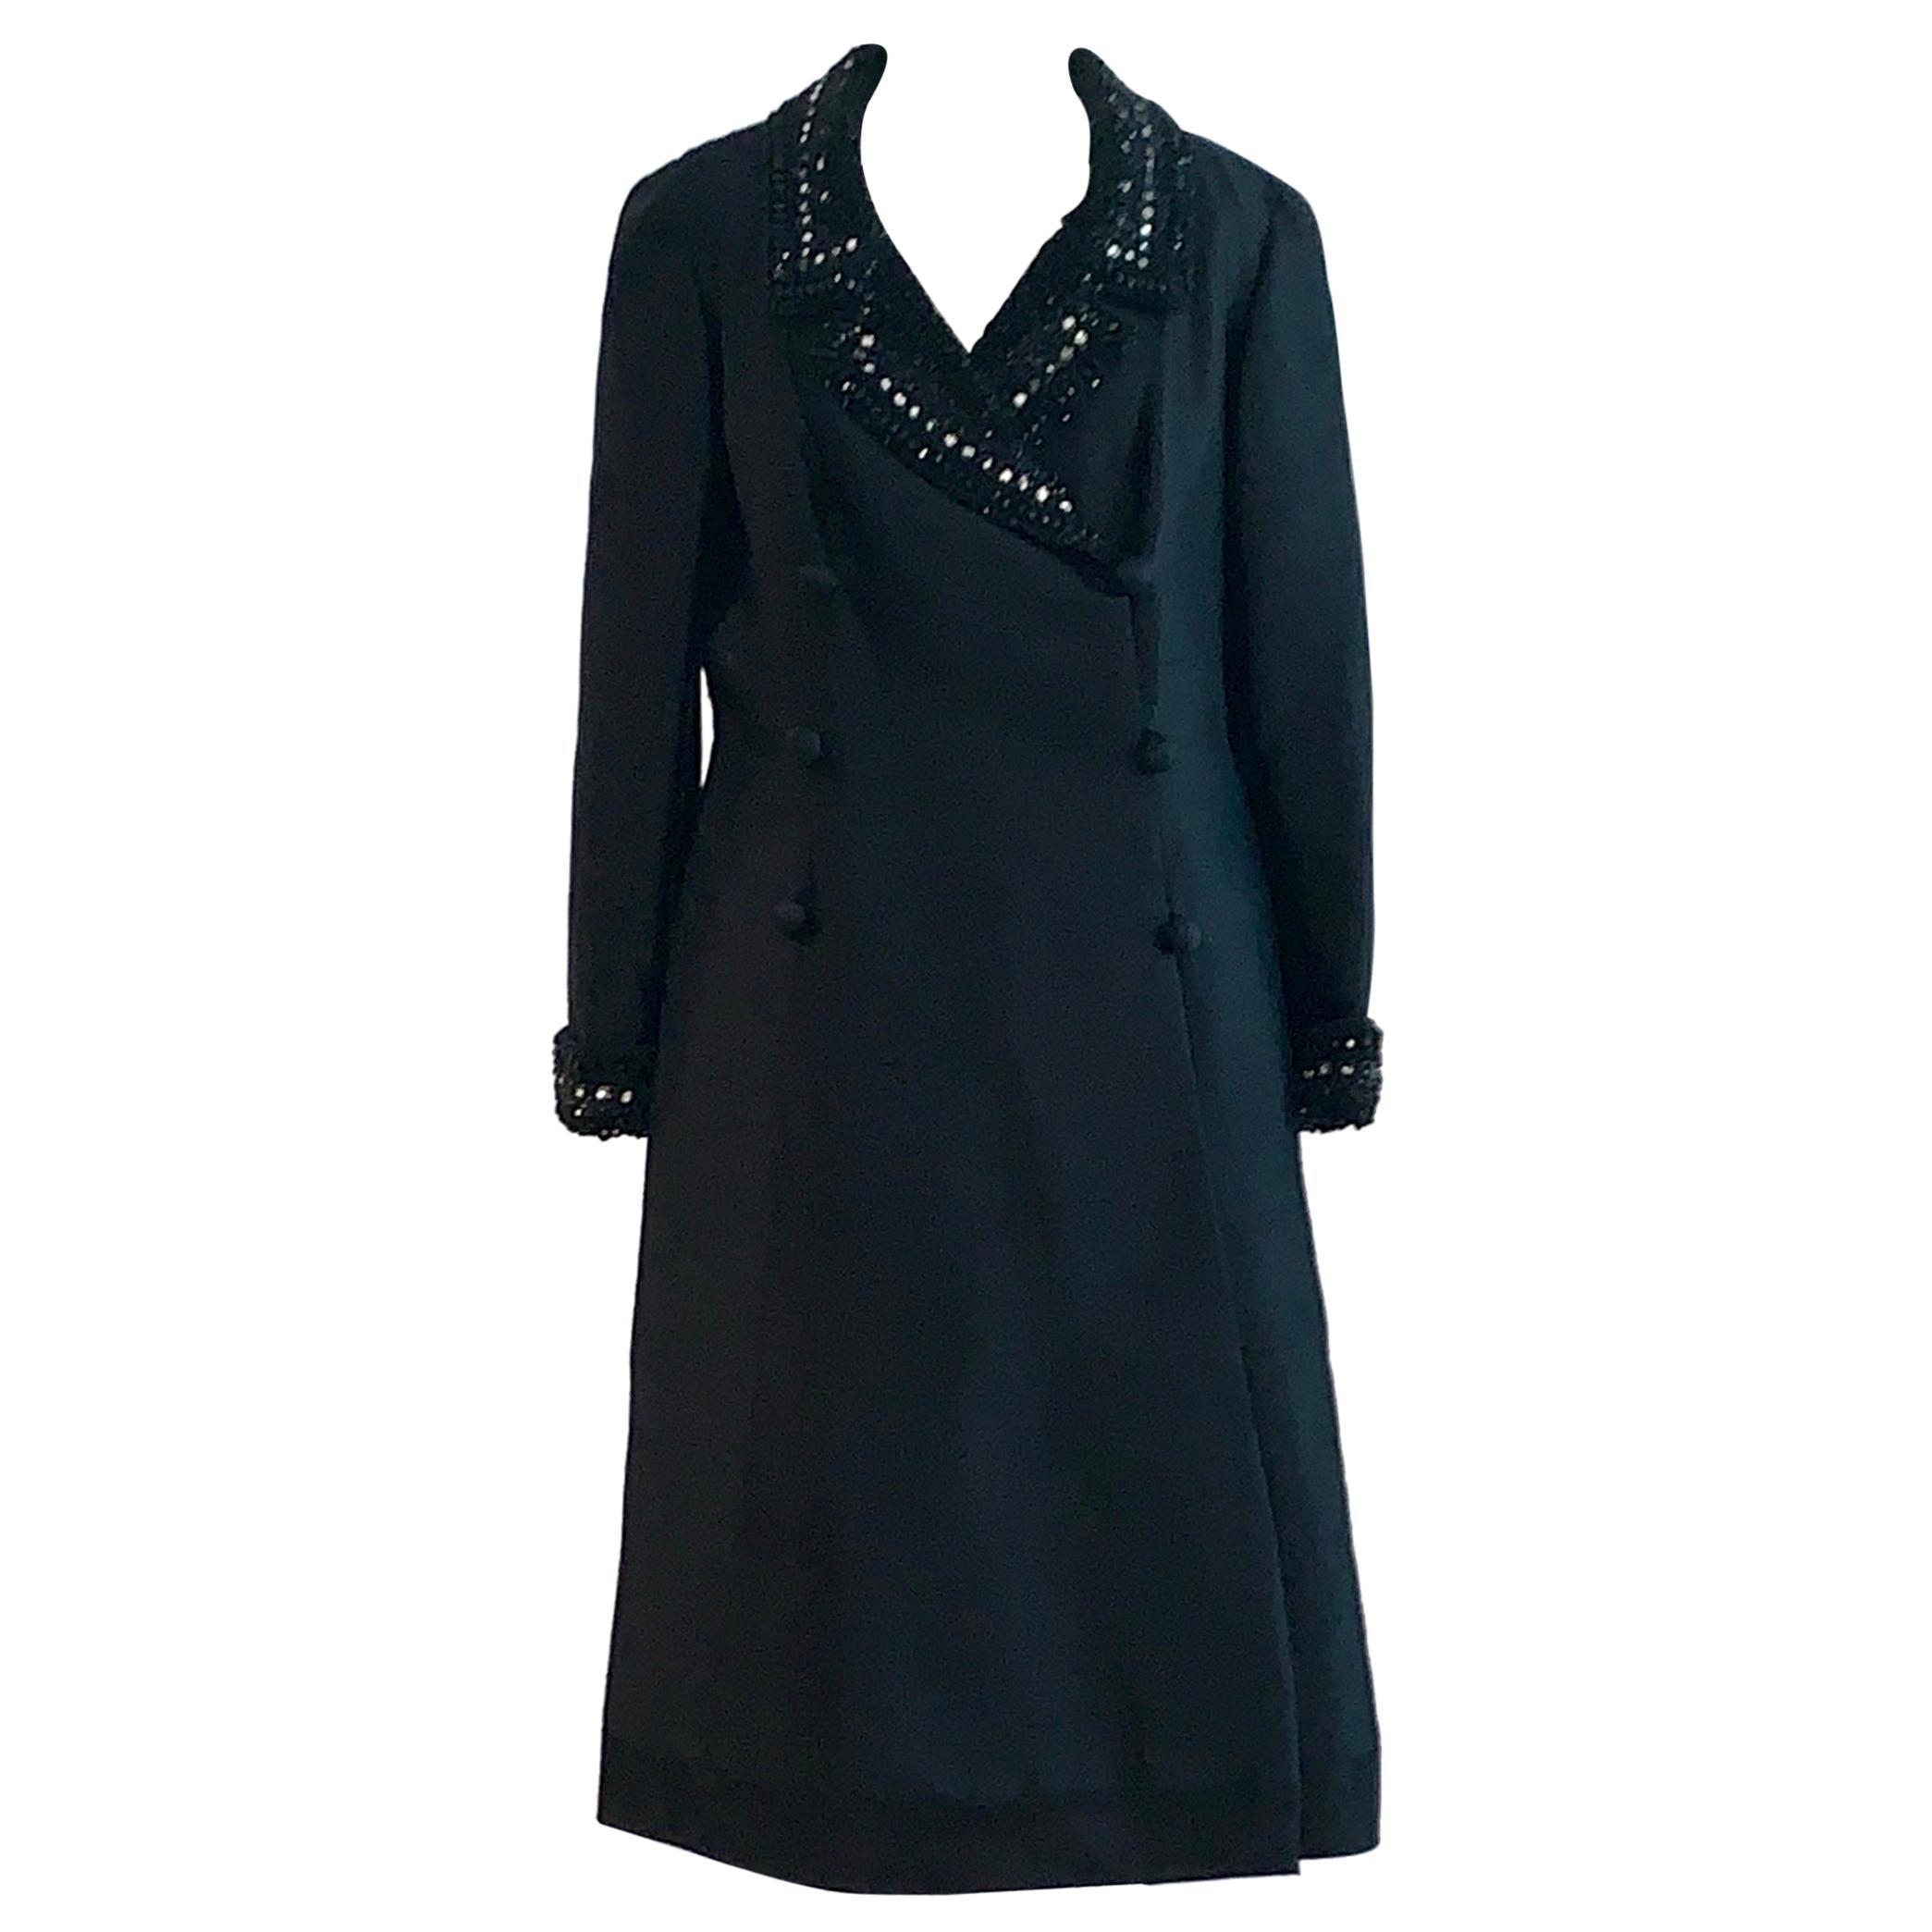 Jean Lutece 1960s Vintage Beaded Black Silk Embellished Coat Dress